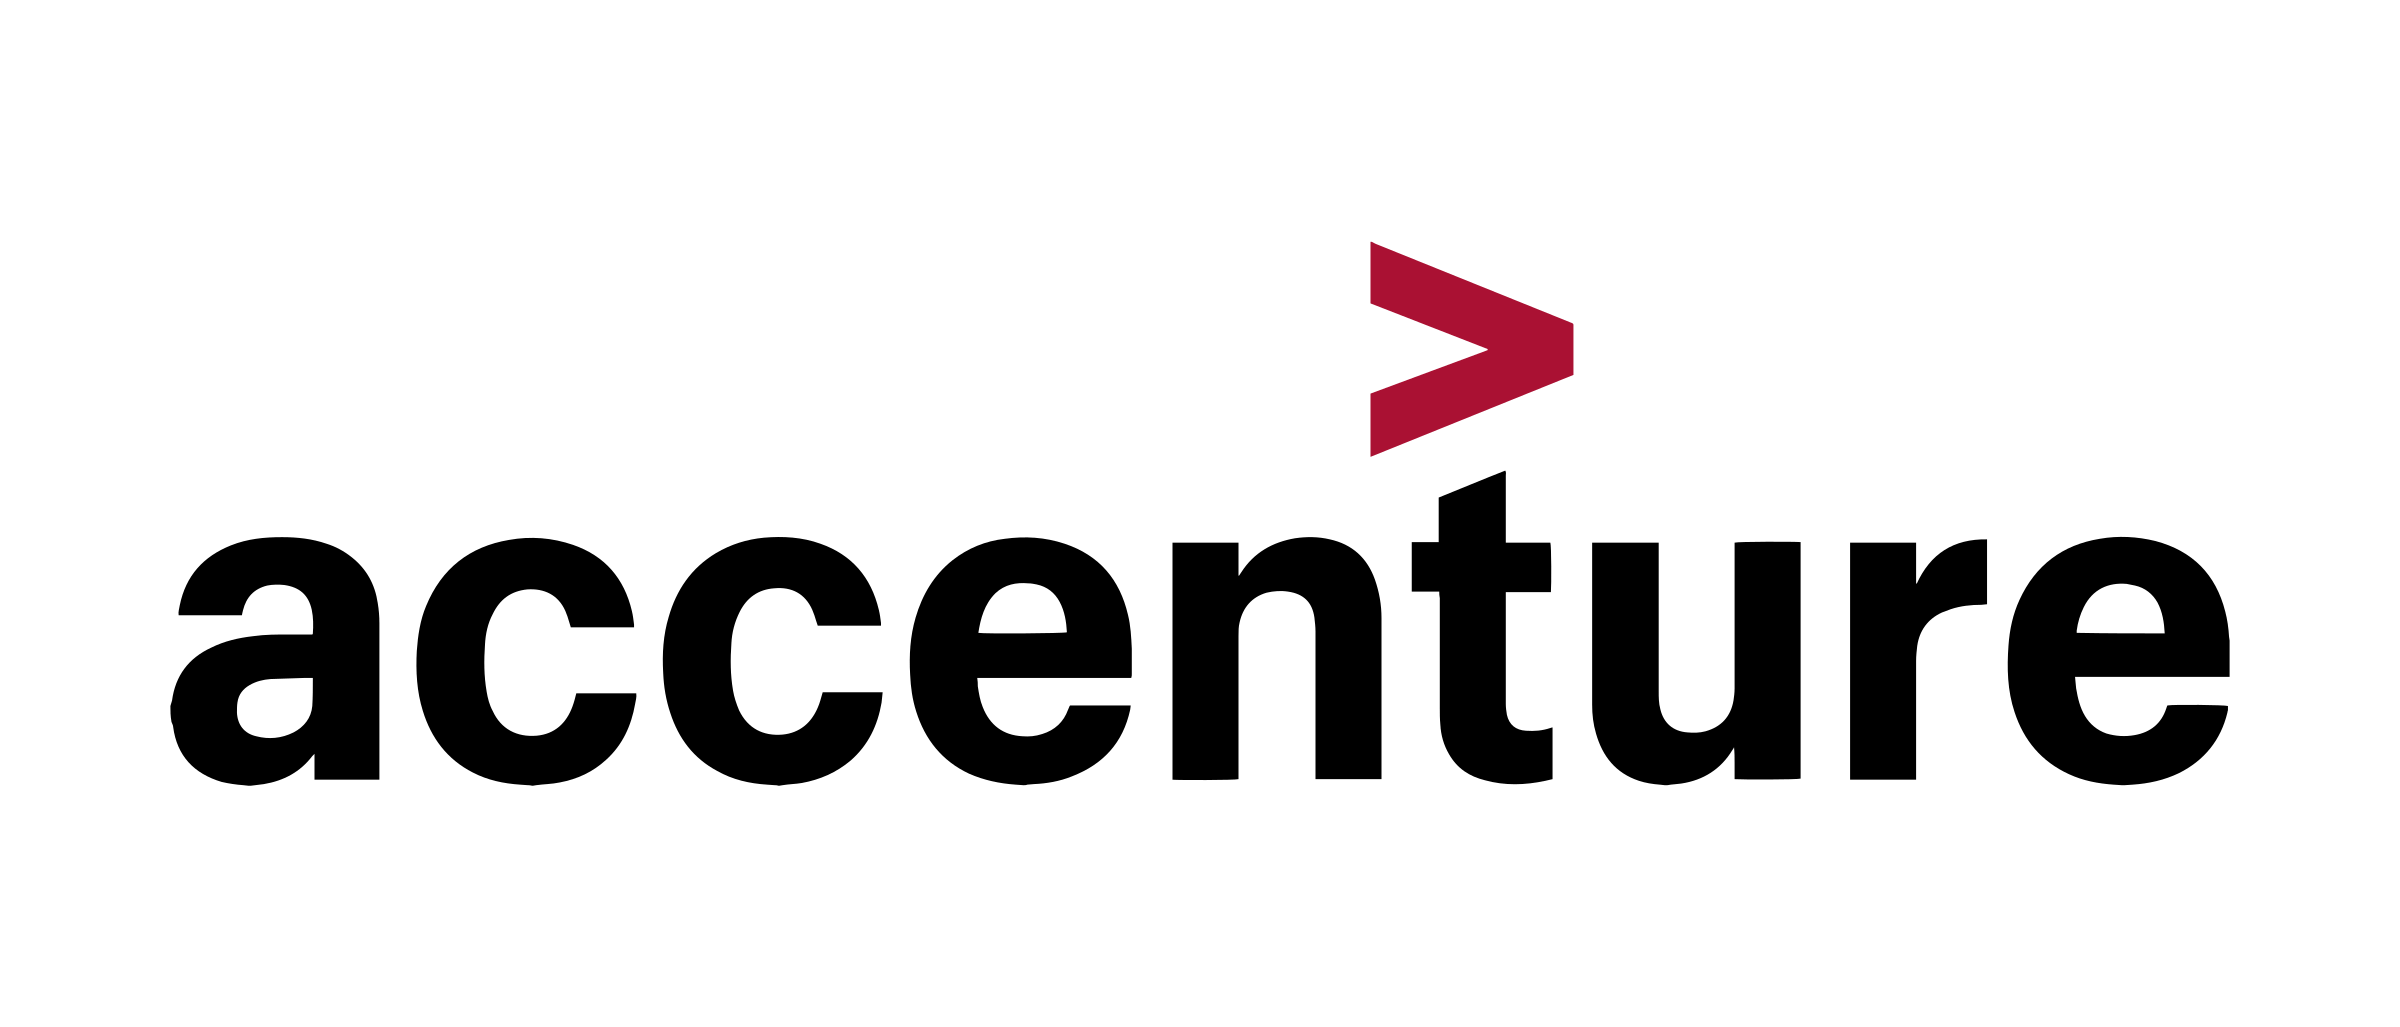 Accenture Logo - Accenture Logo PNG Transparent & SVG Vector